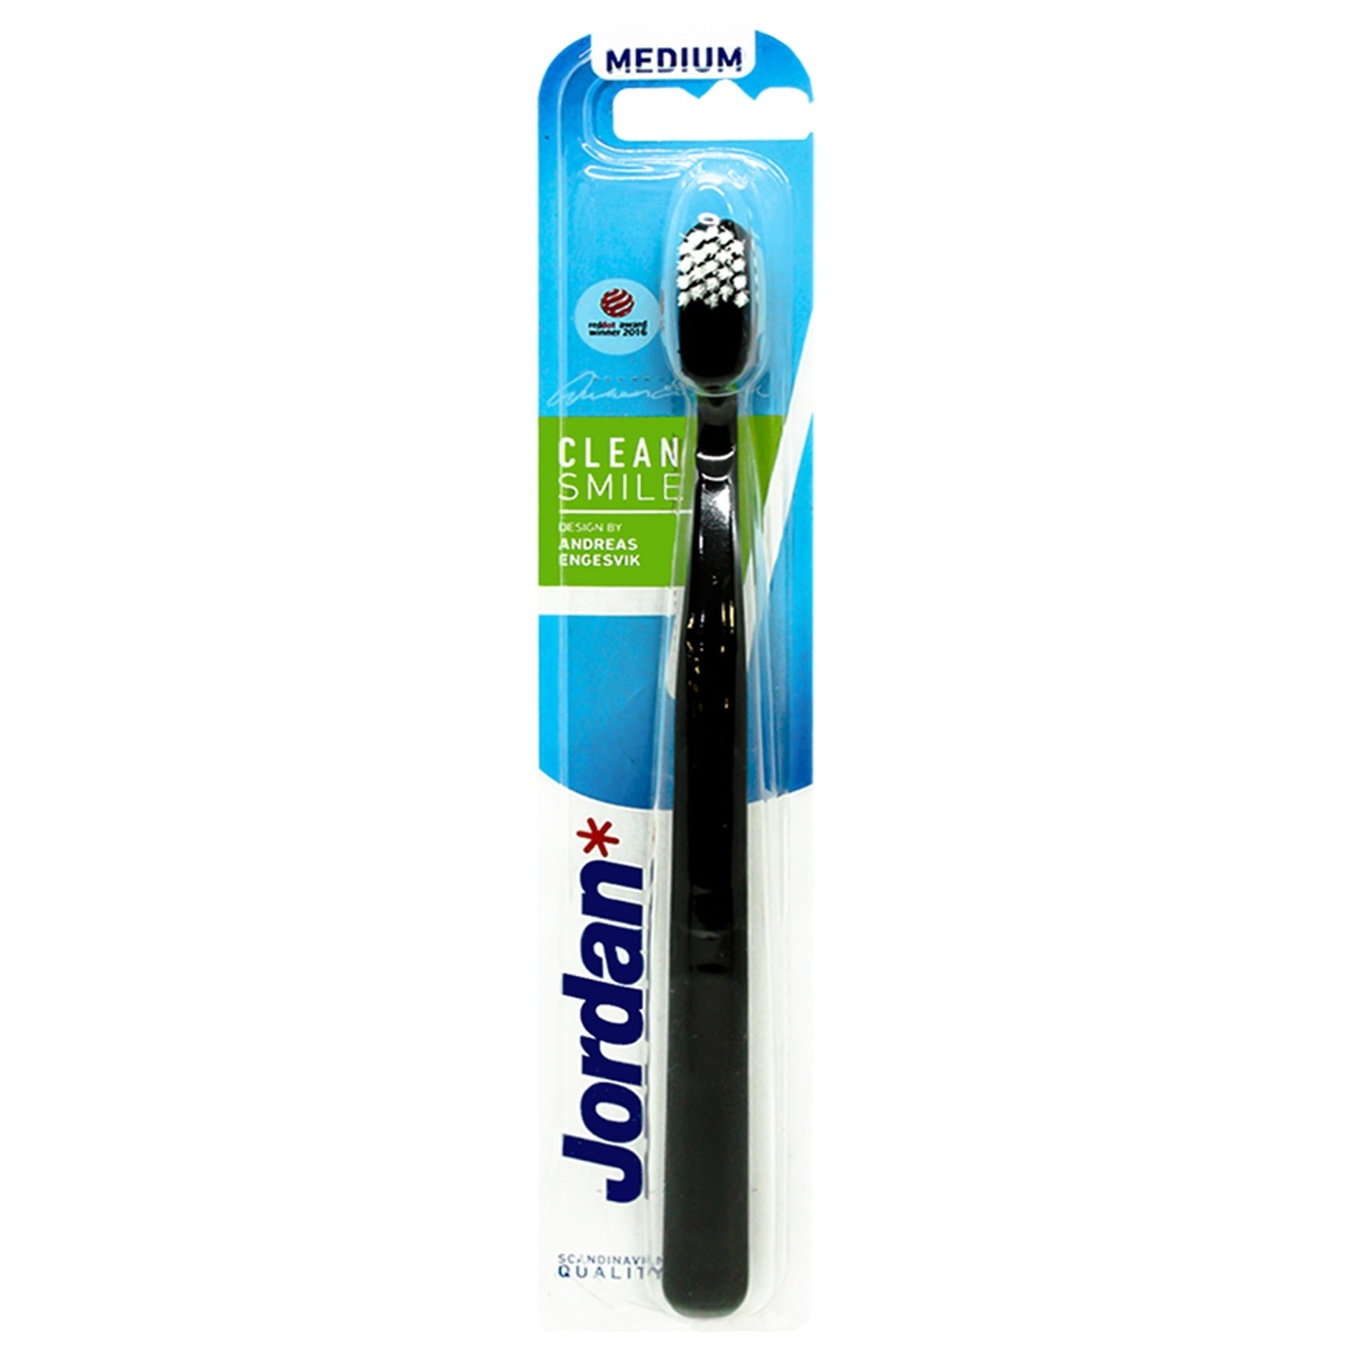 Toothbrush Jordan clean smile medium